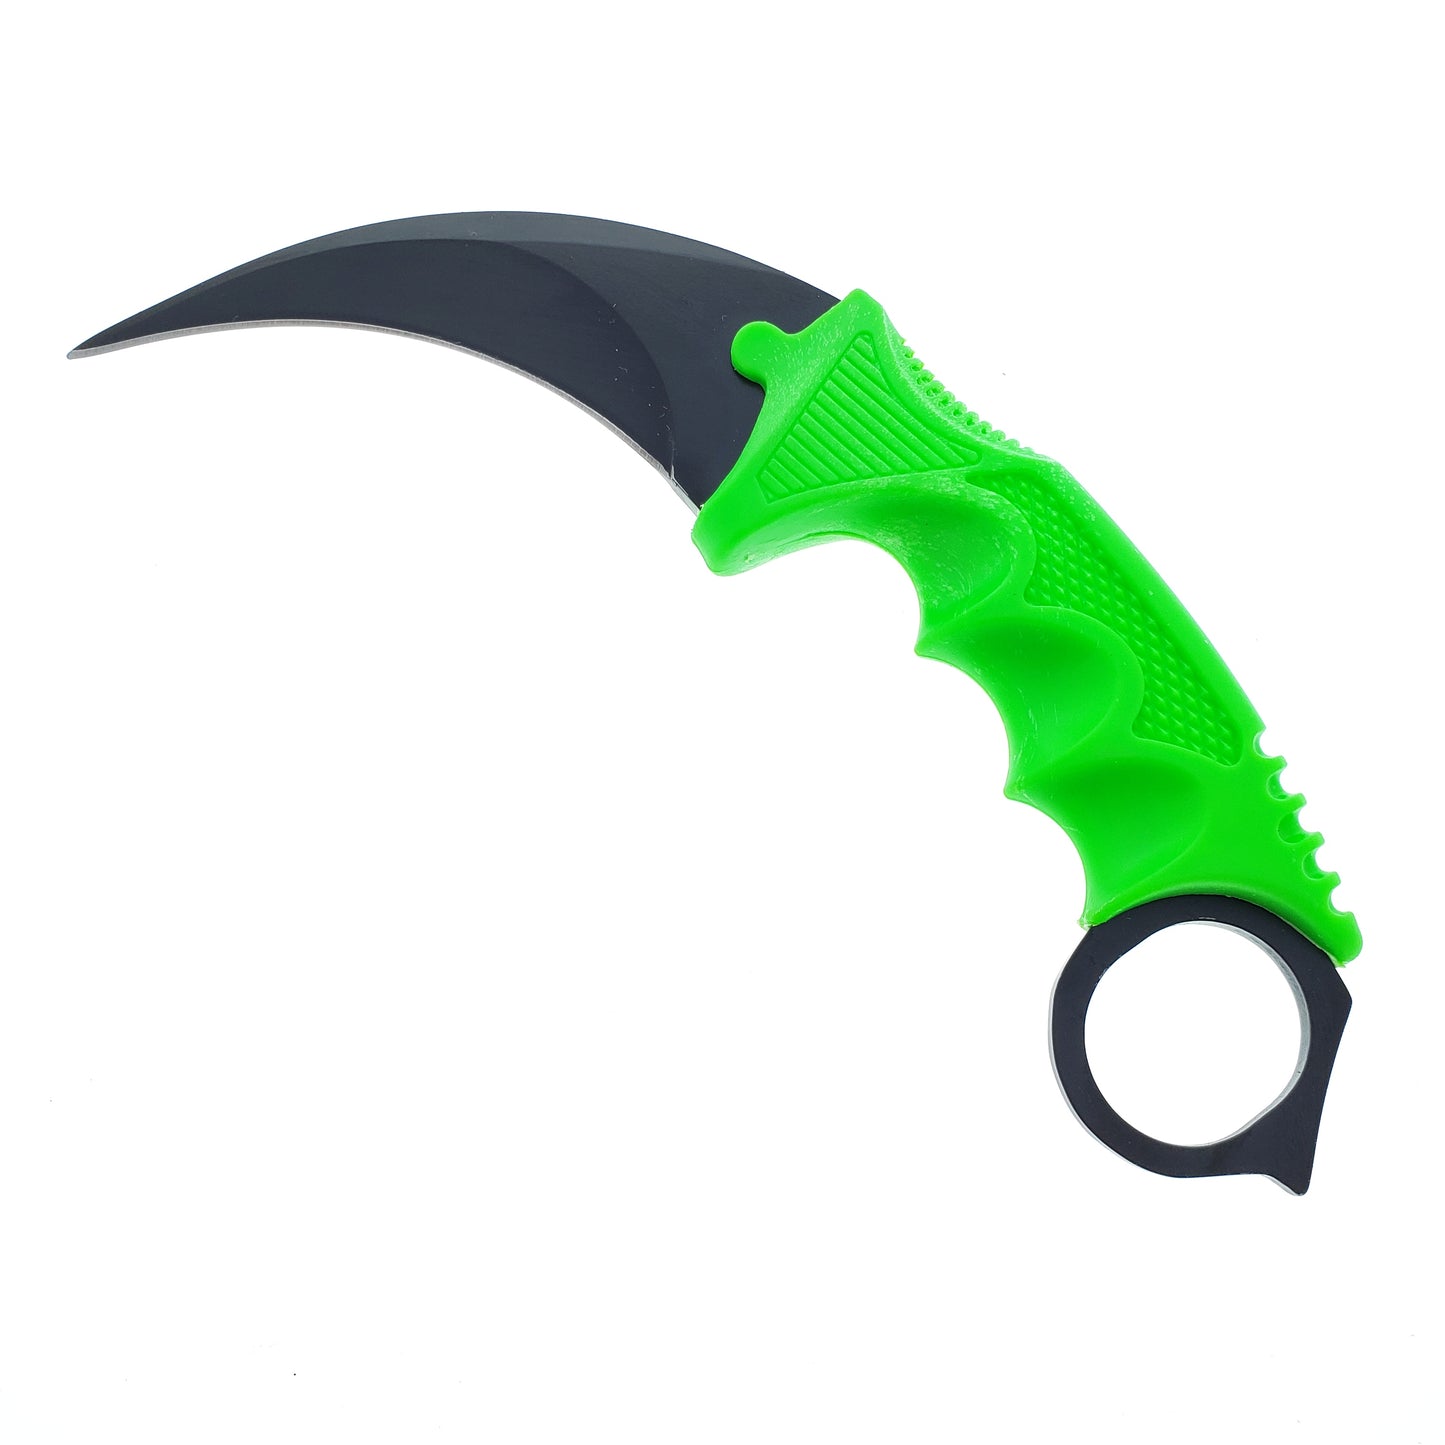 Wholesale Green Karambit Knife Distributor | Karambit Knives In-Bulk